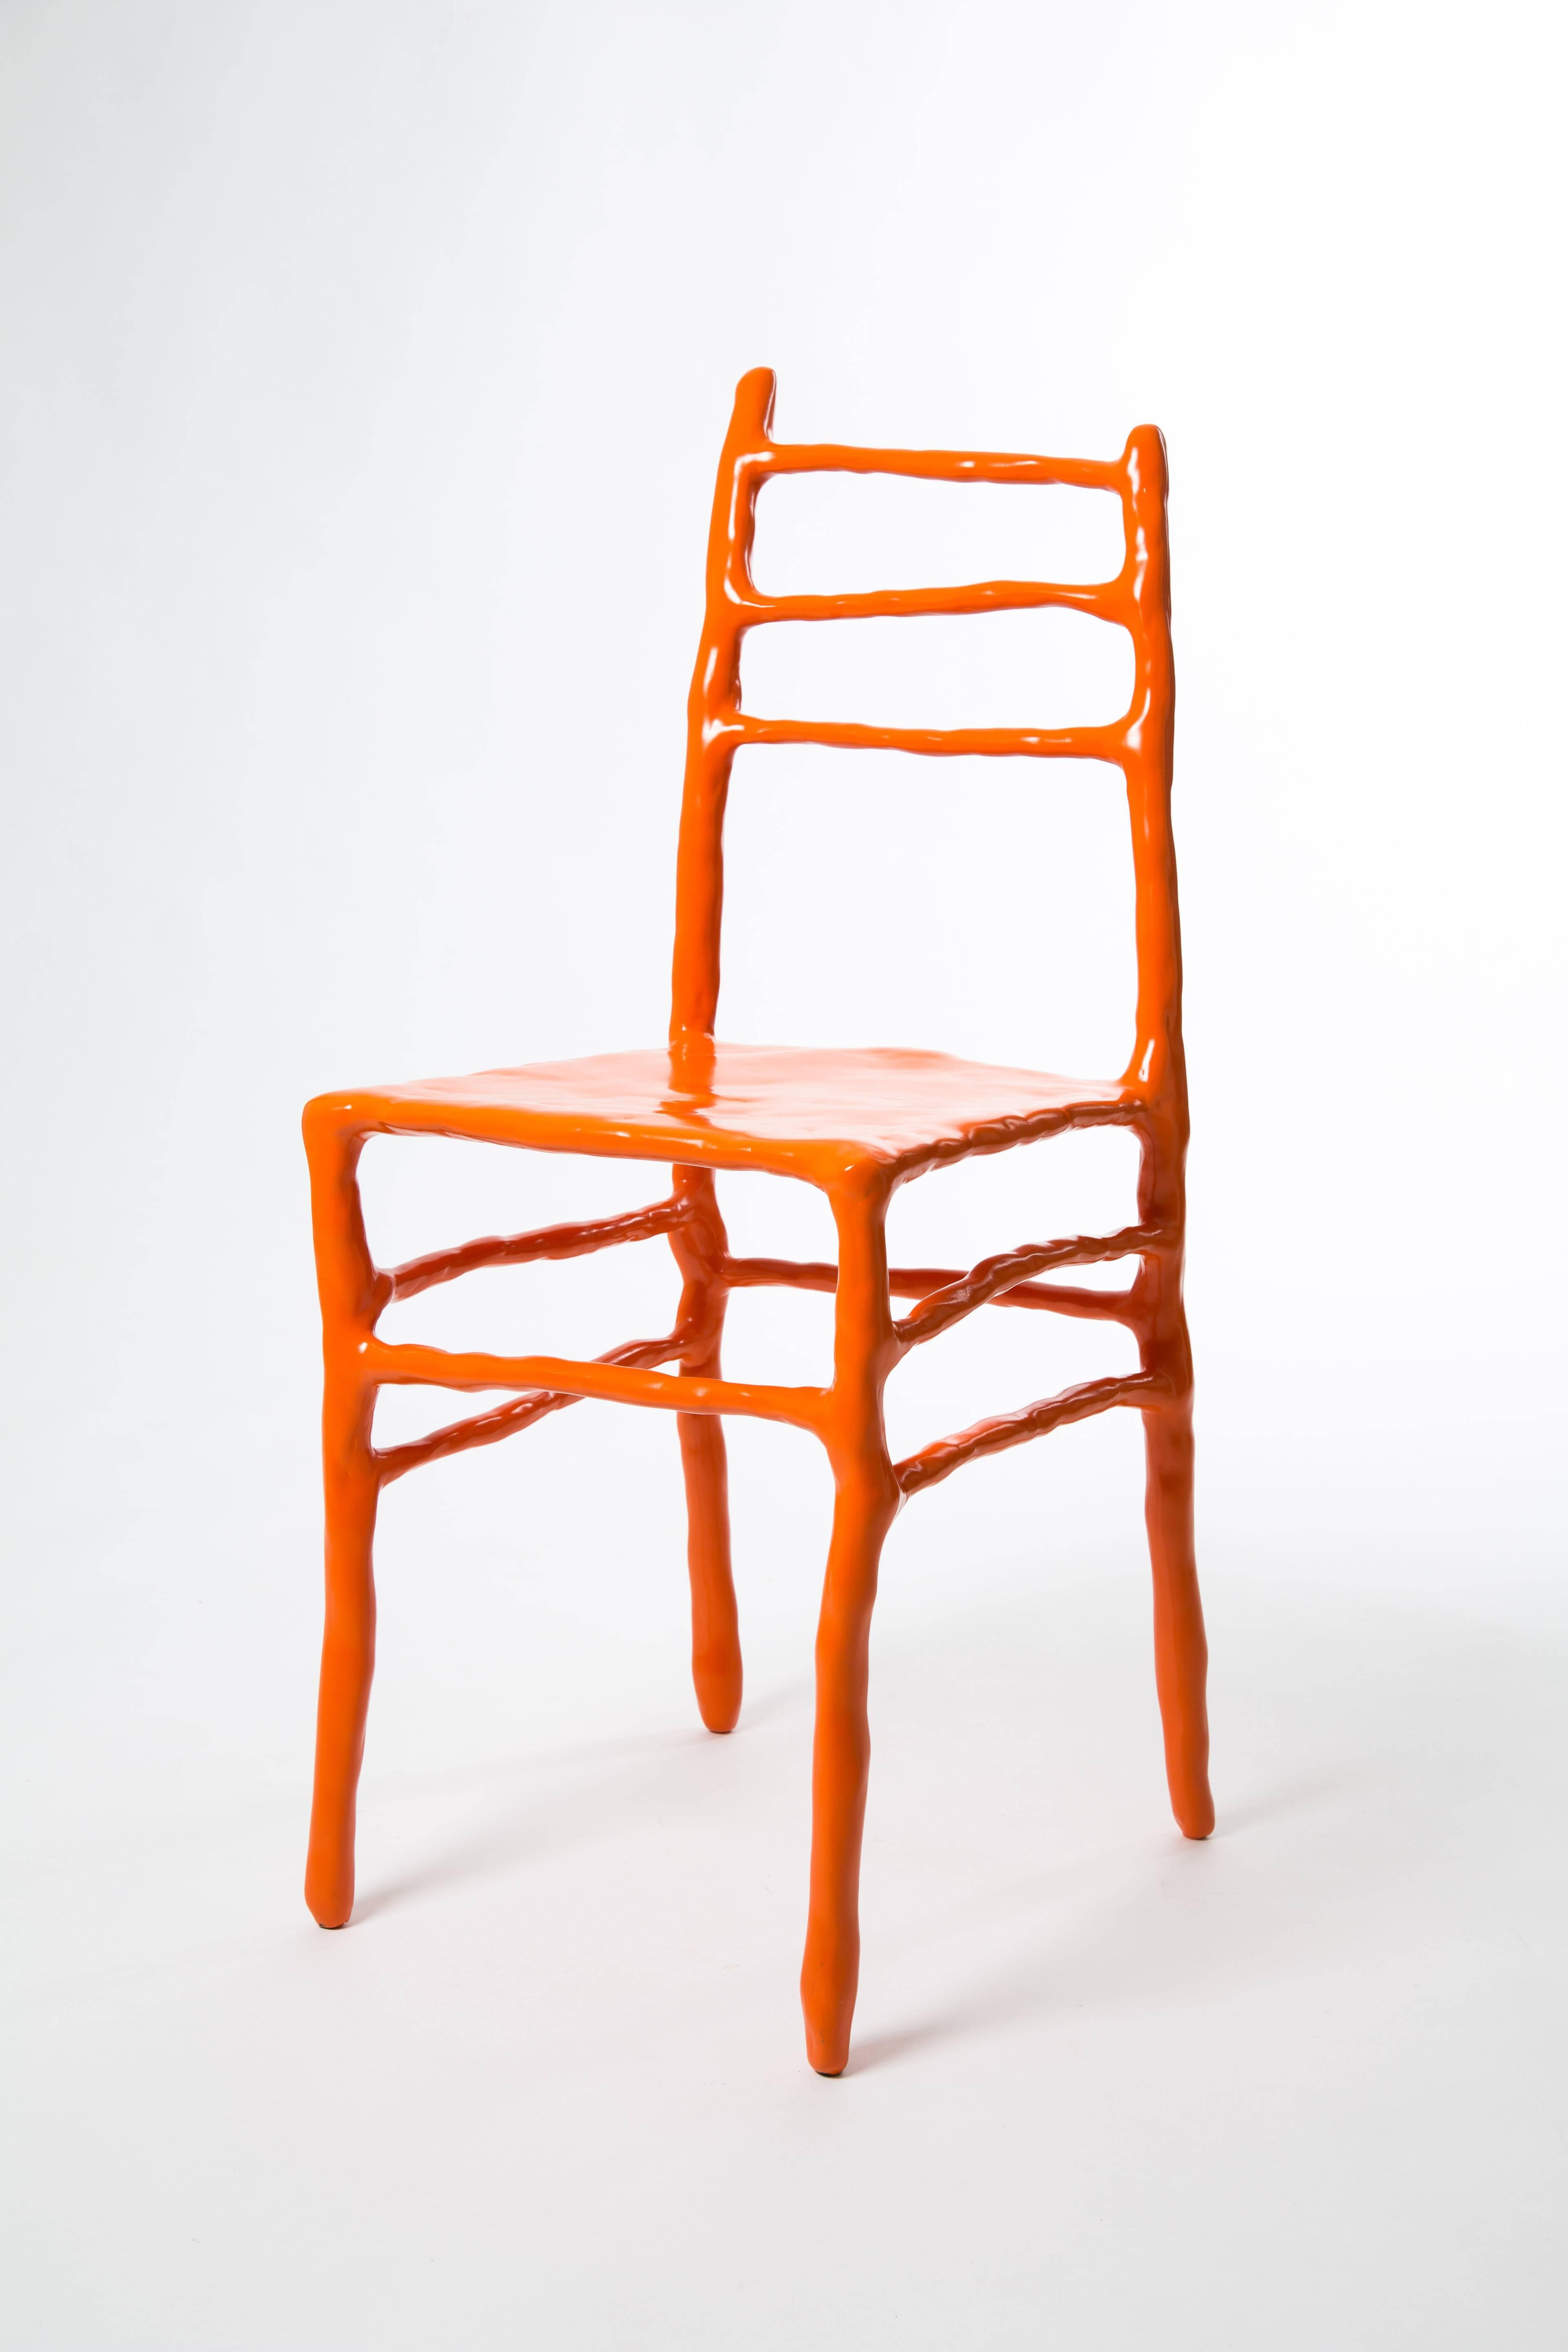 Maarten Baas Clay Chair Limited Edition Basel Chair 2007 Orange For Sale 3